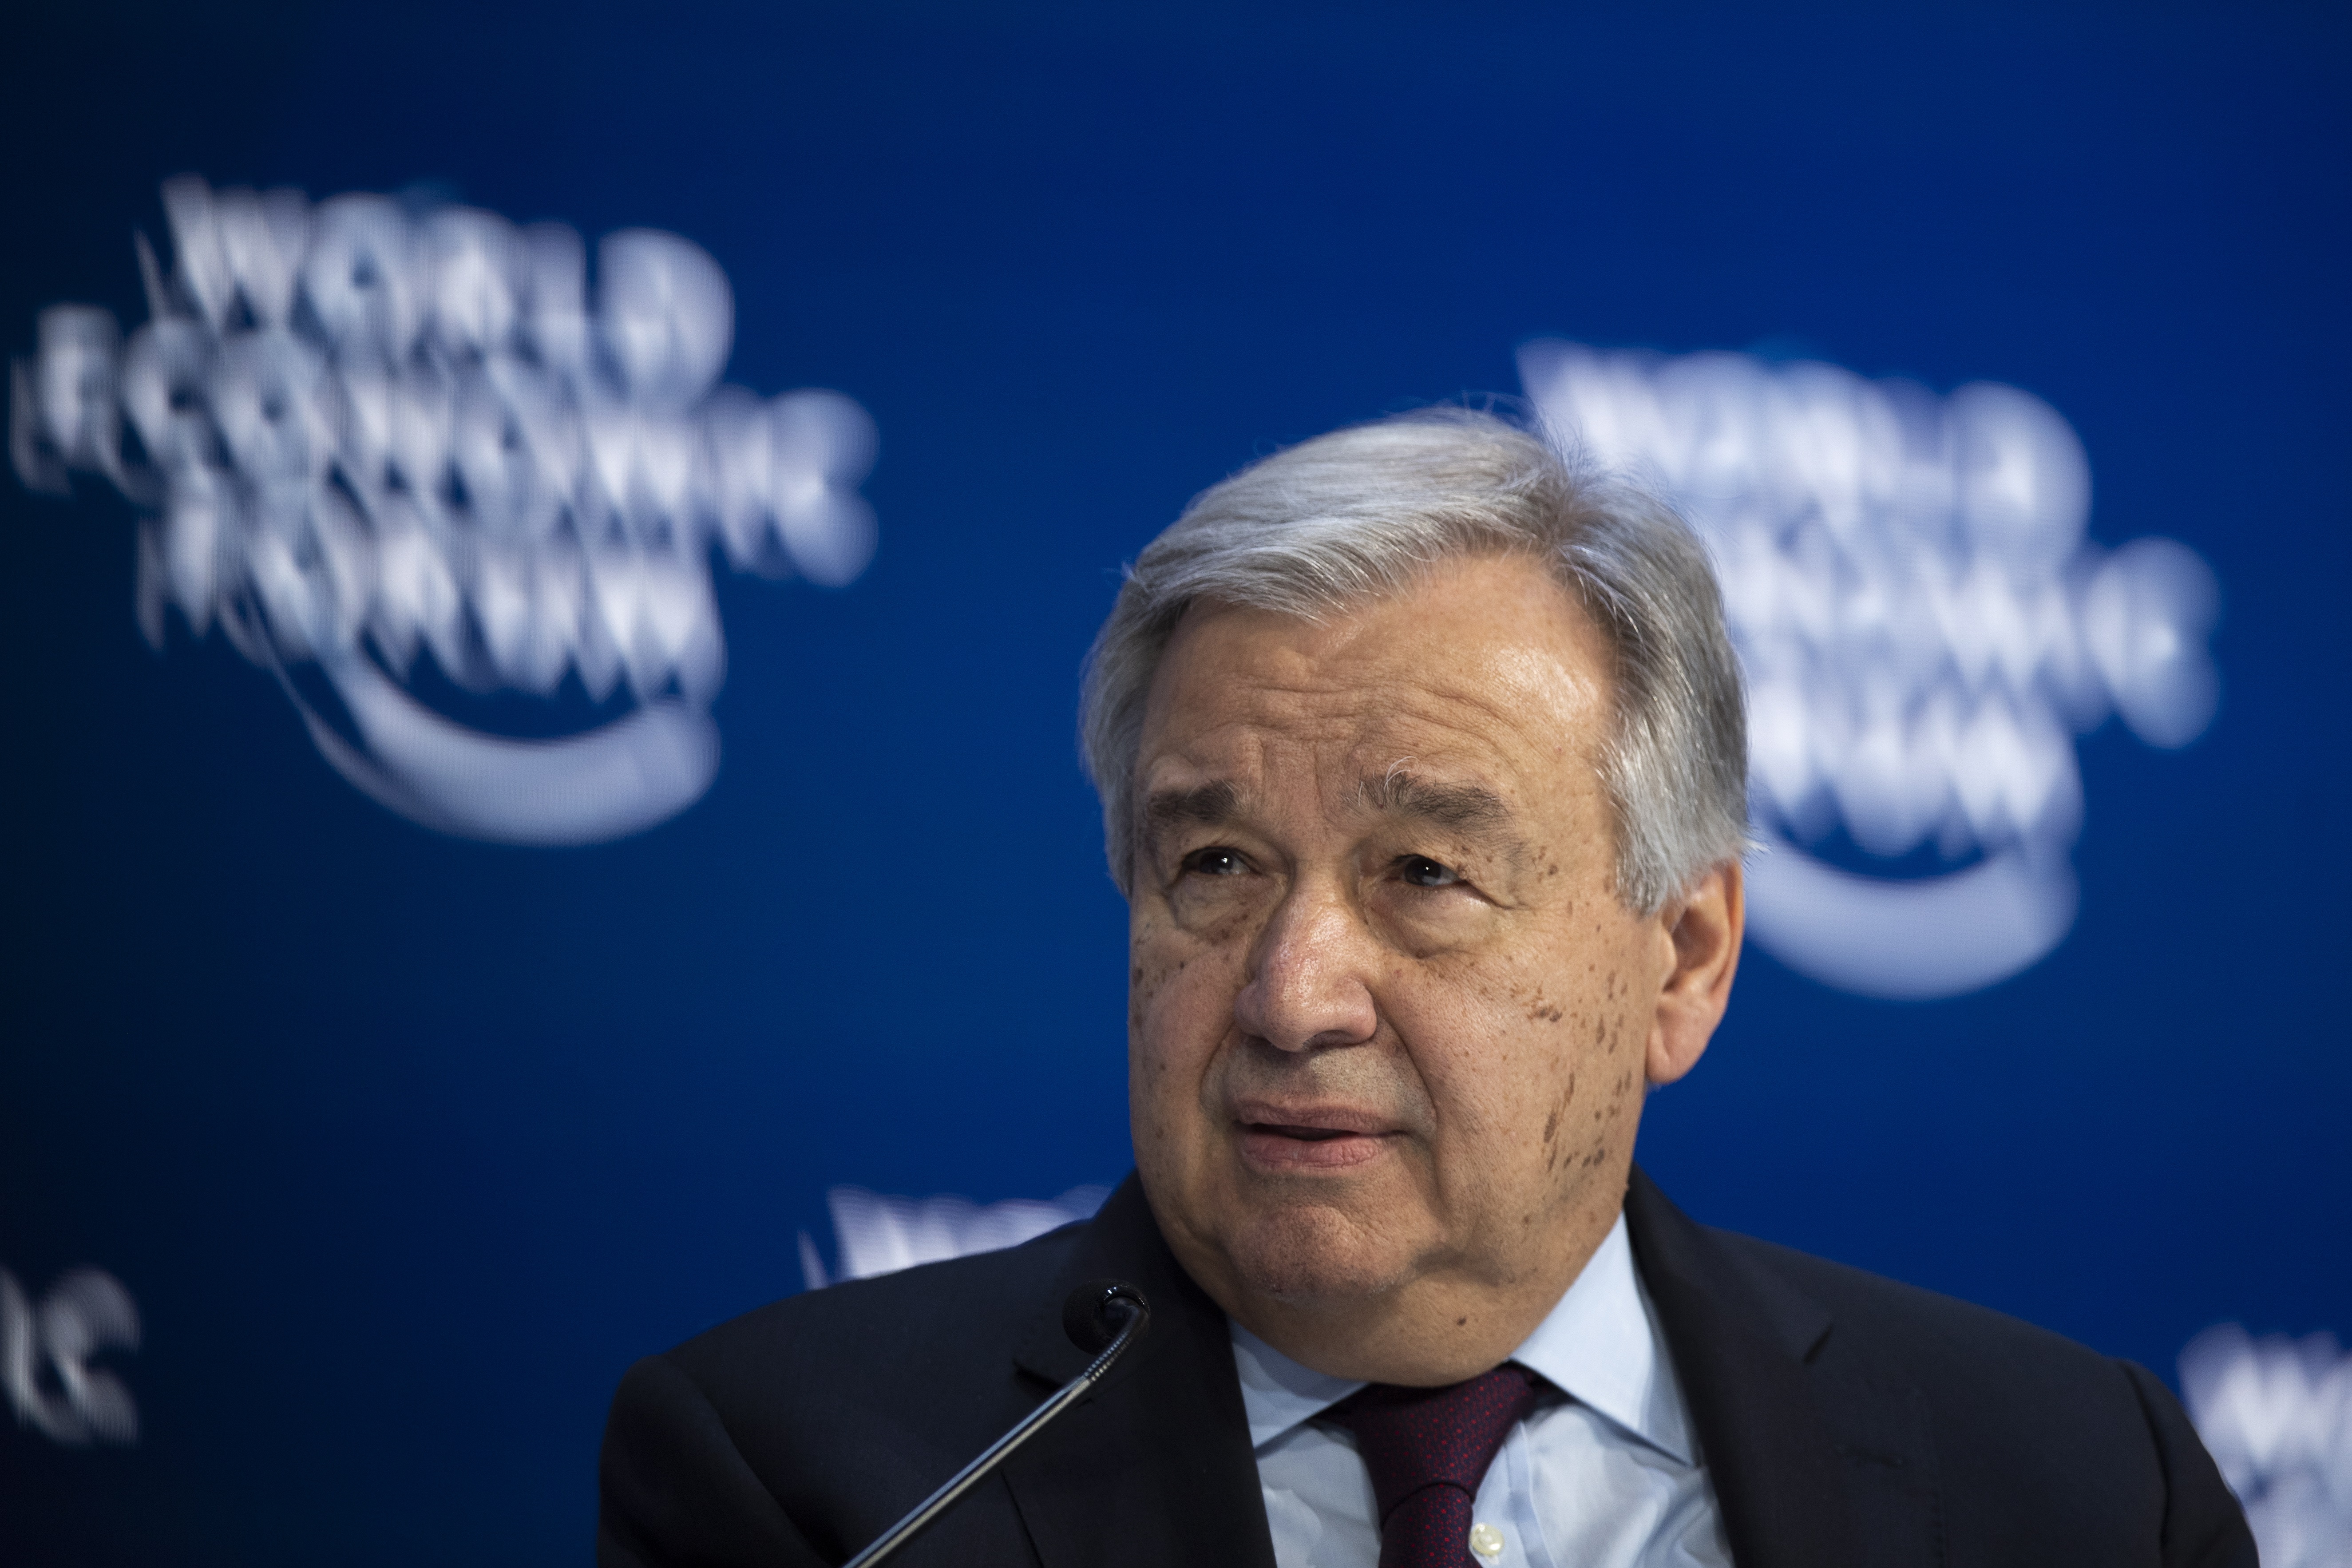 Cumbre sobre el clima debe actuar para “salvar a la humanidad”, afirma Guterres